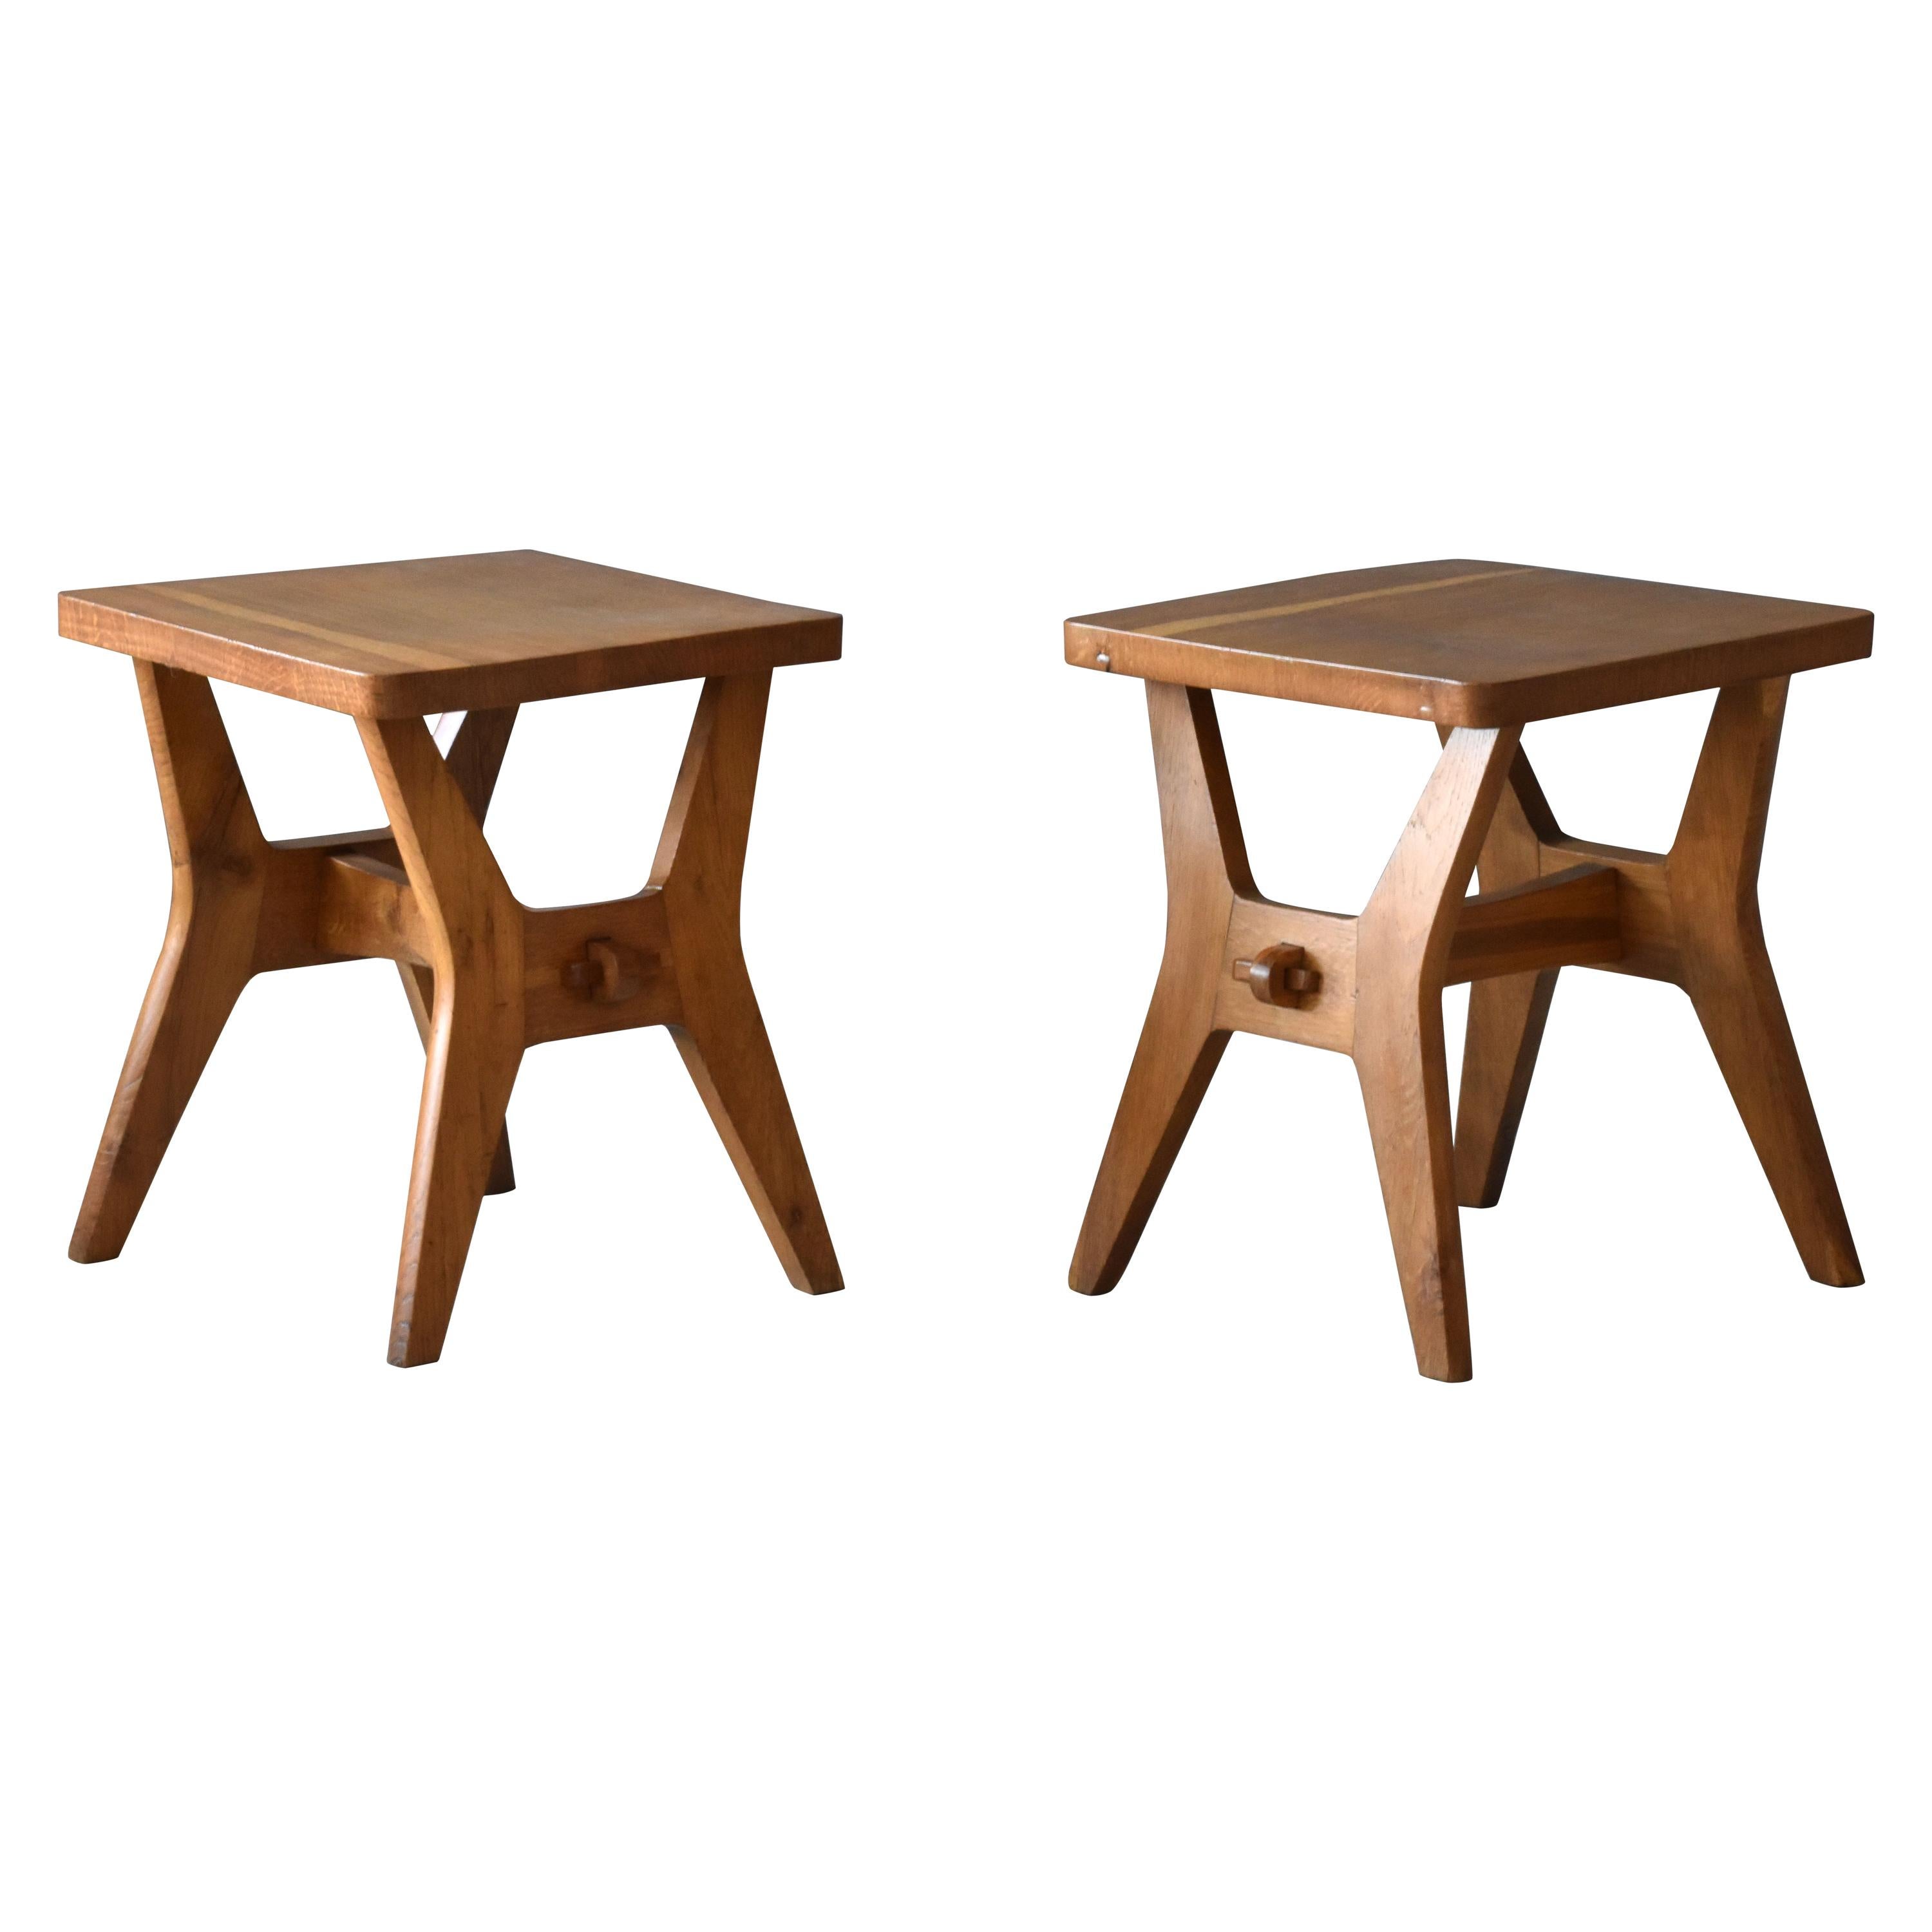 Italian modernist designer, Functionalist Oak stools, Italy, 1950s